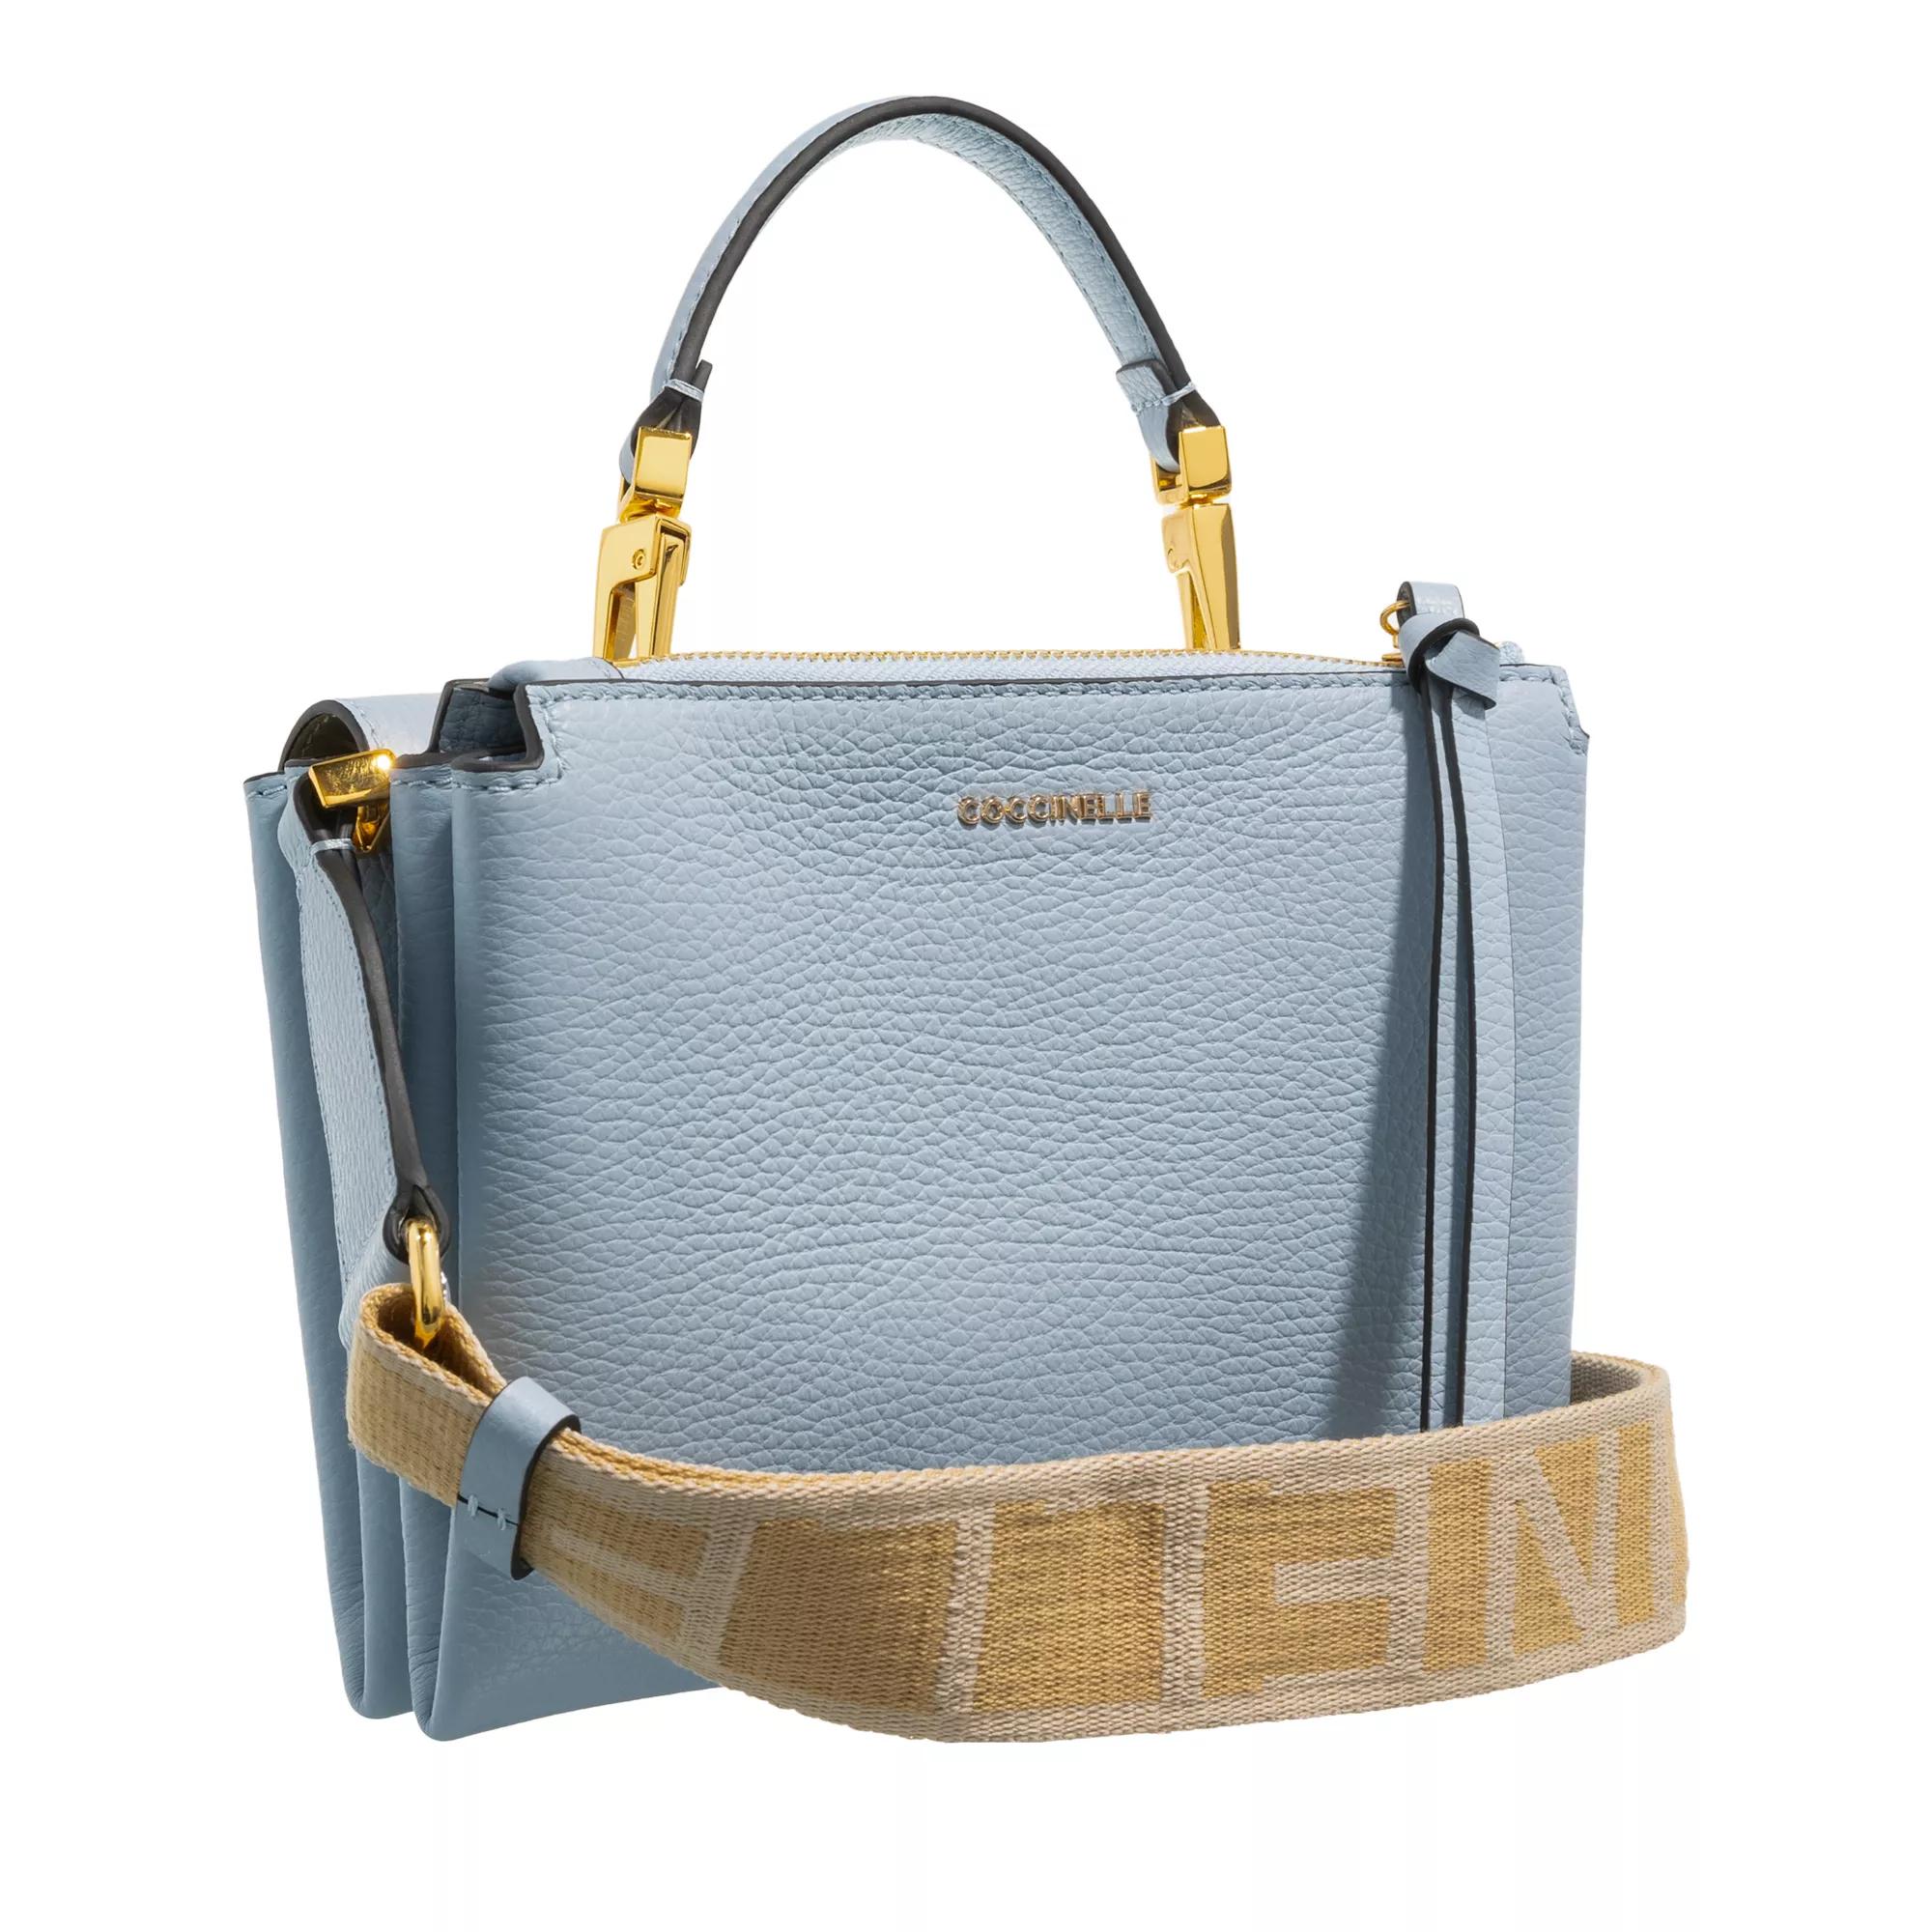 Coccinelle Satchels Arlettis Signature Handbag in blauw